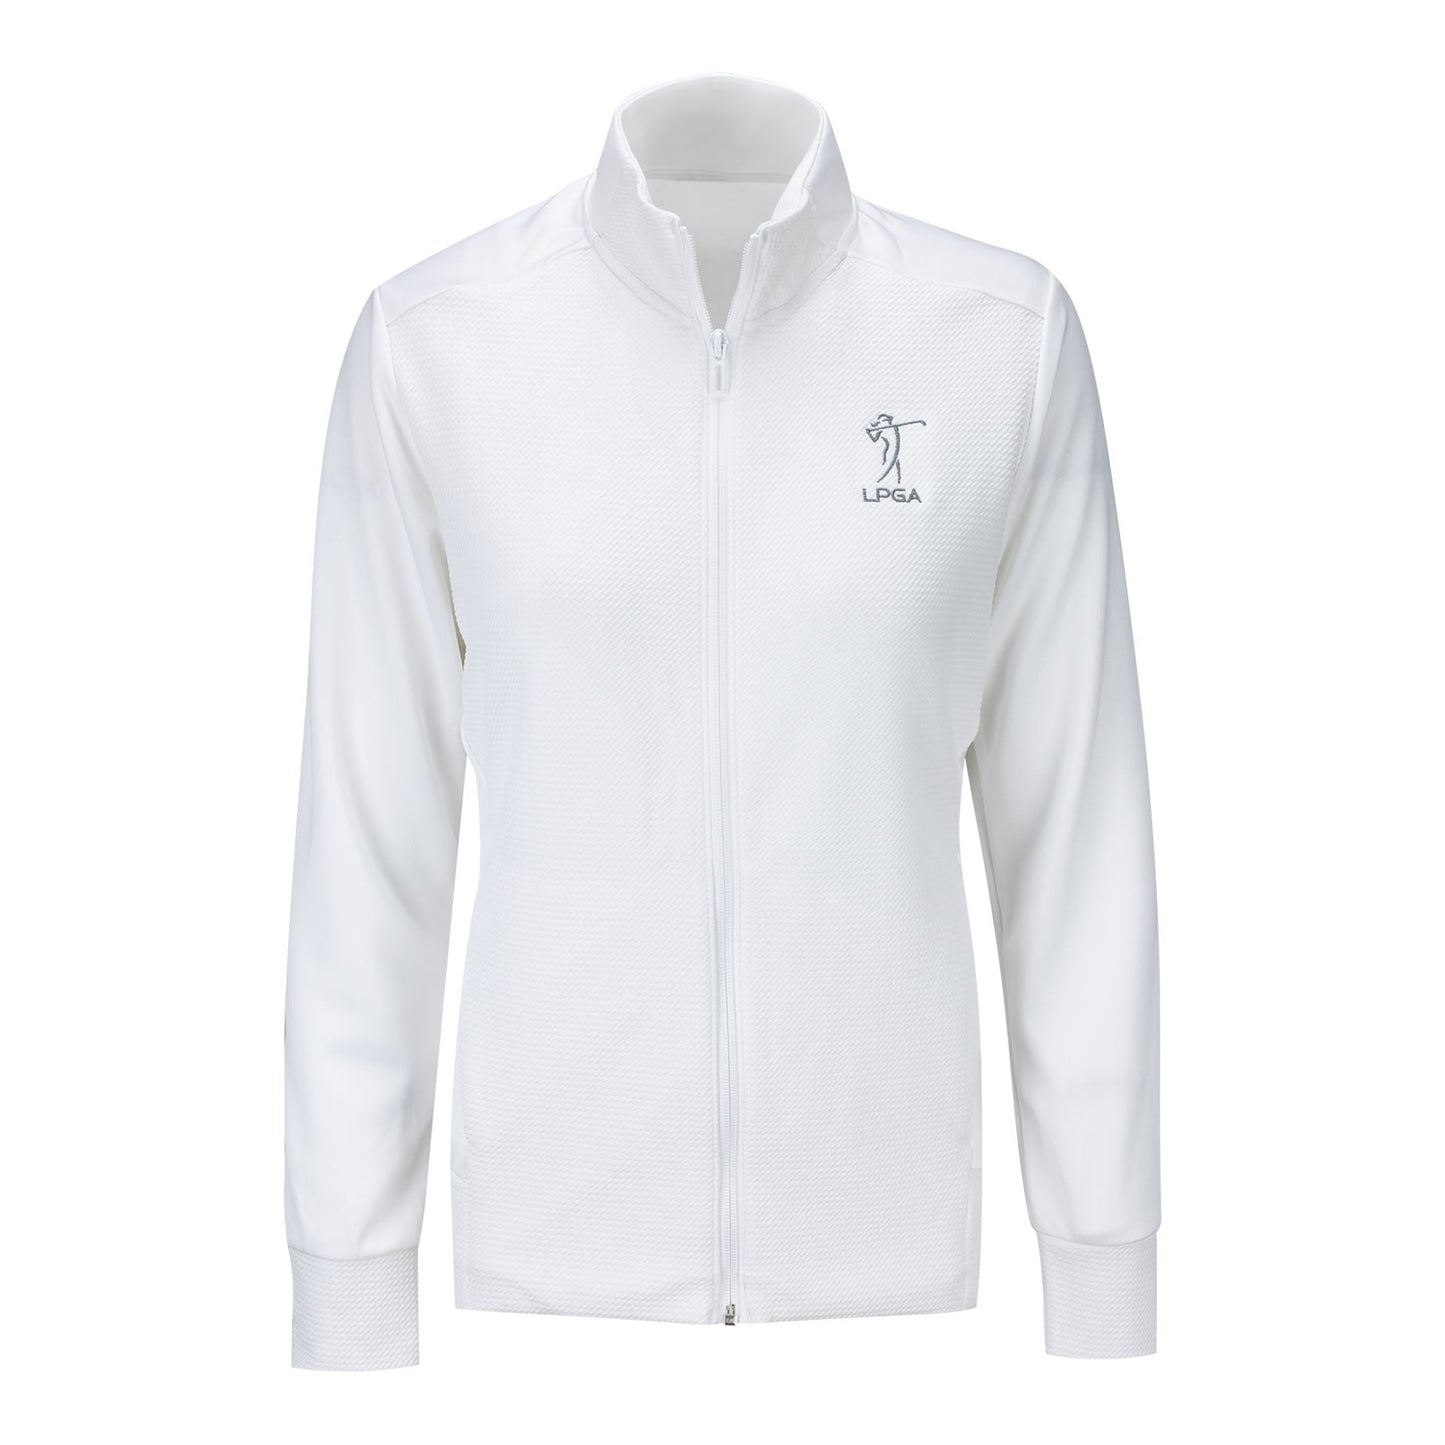 Adidas  LPGA Golf Women's Textured Full Zip Jacket in White - Front View